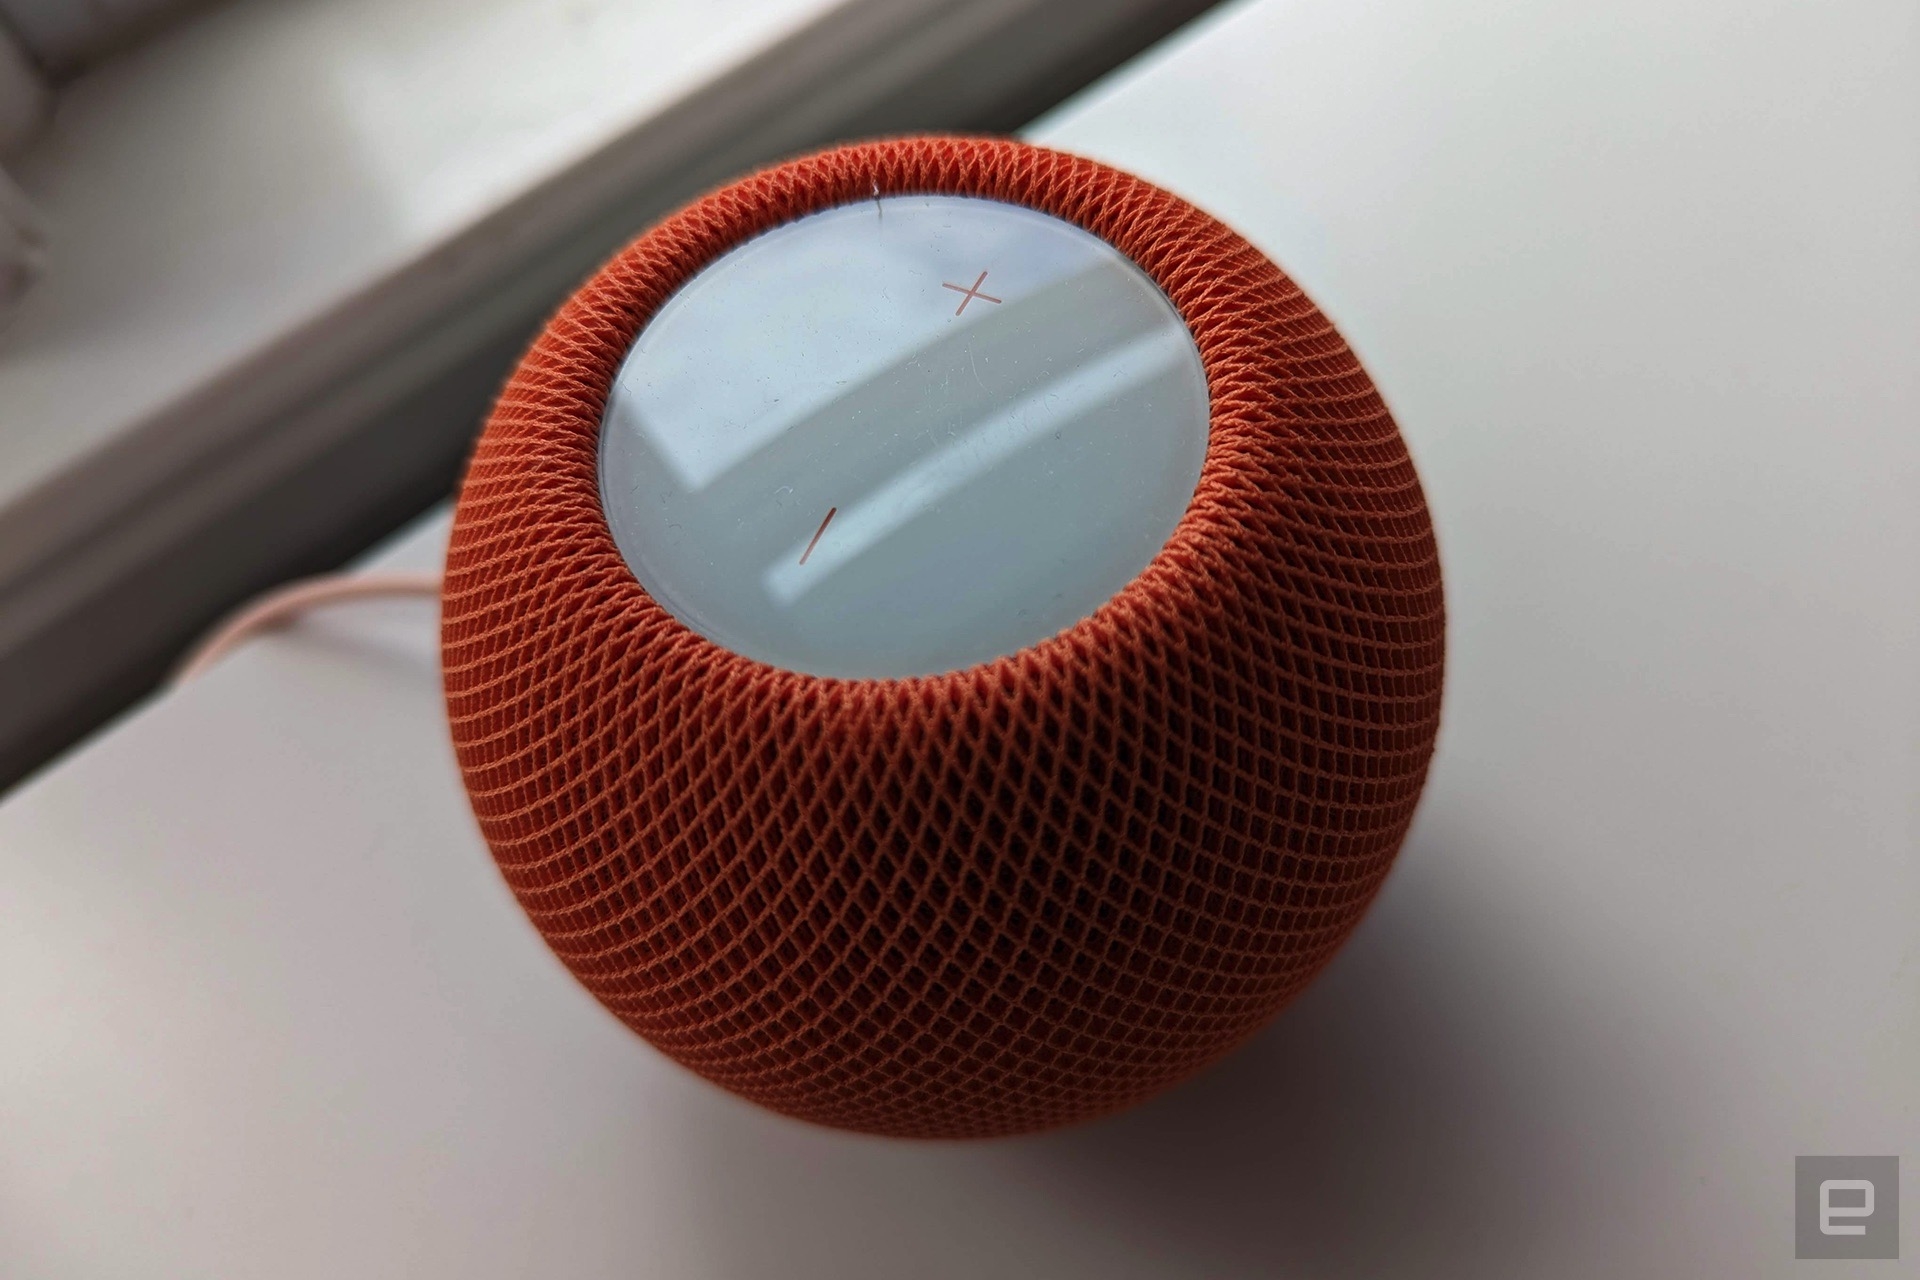 Apple HomePod mini in orange | DeviceDaily.com